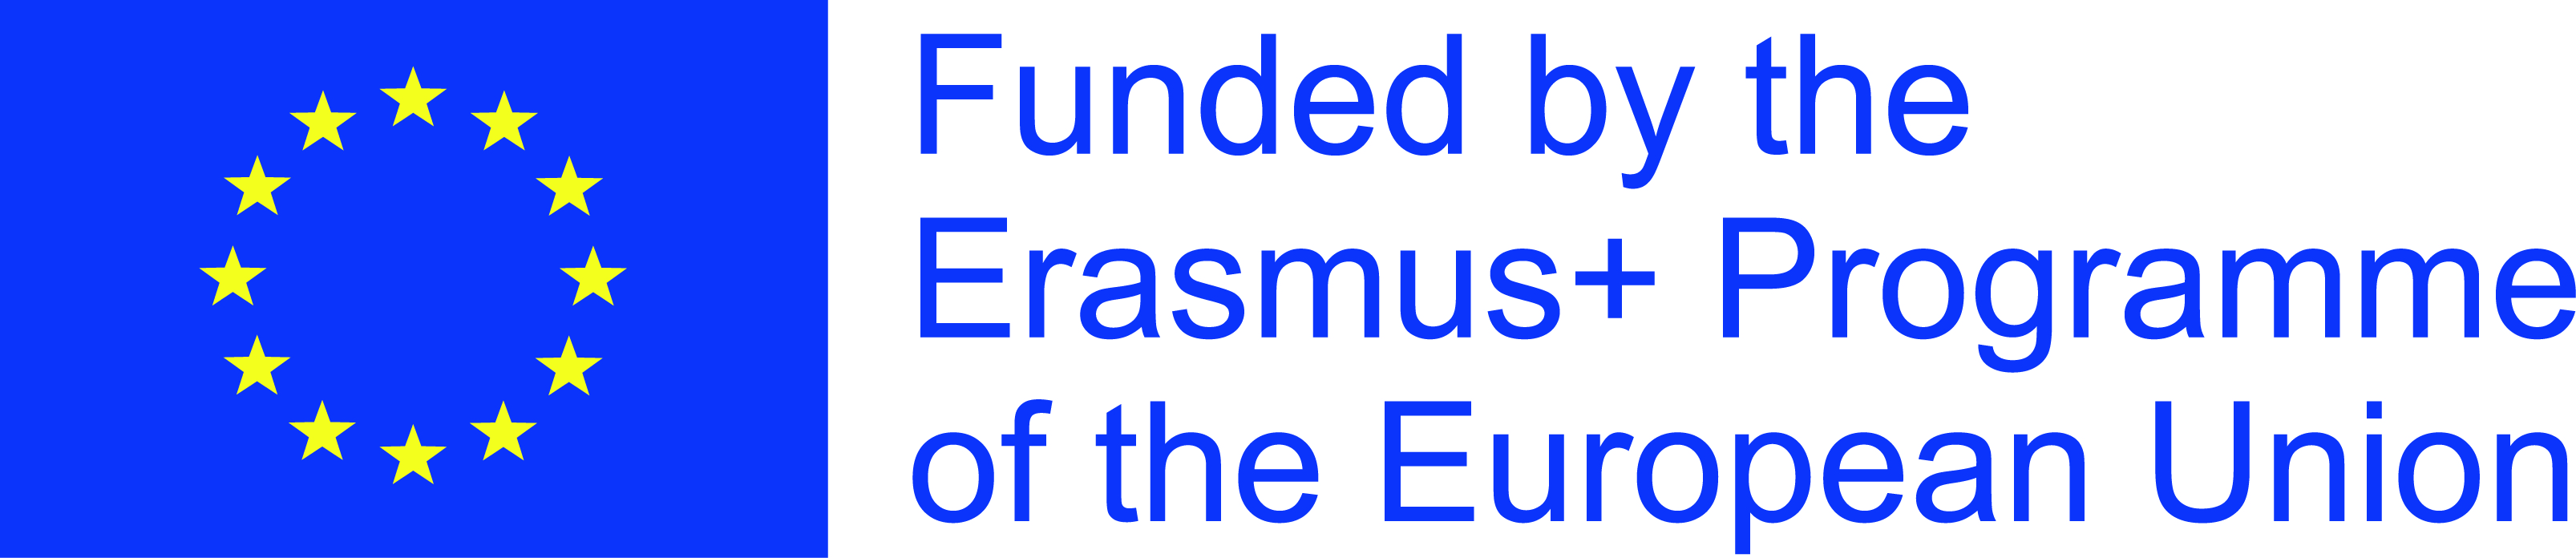 13 priedas. Logotipas EU veliava funded